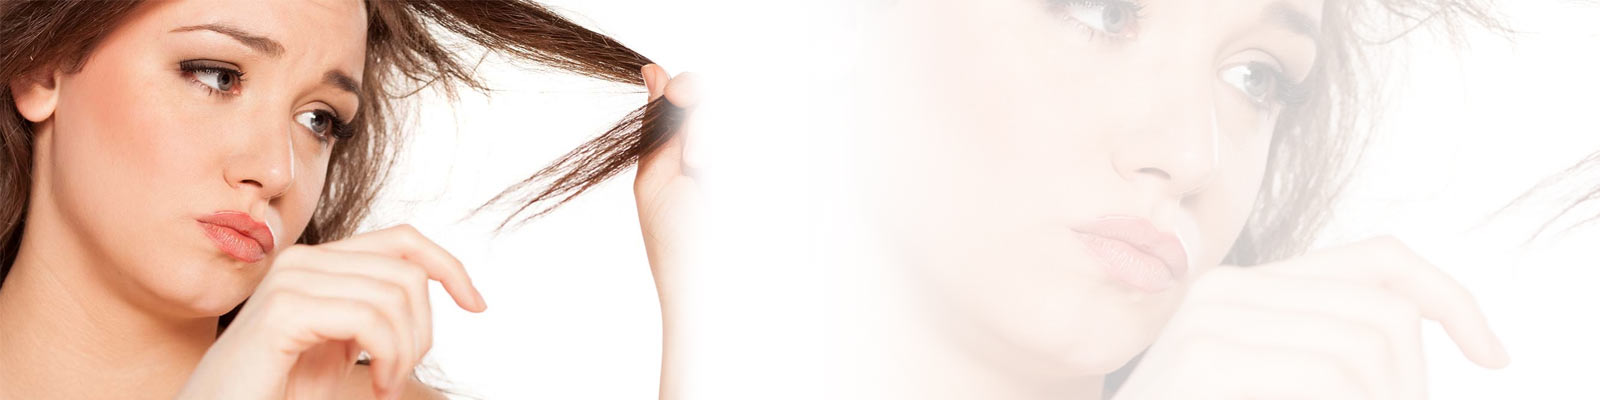 Hair Loss Treatment for  Women